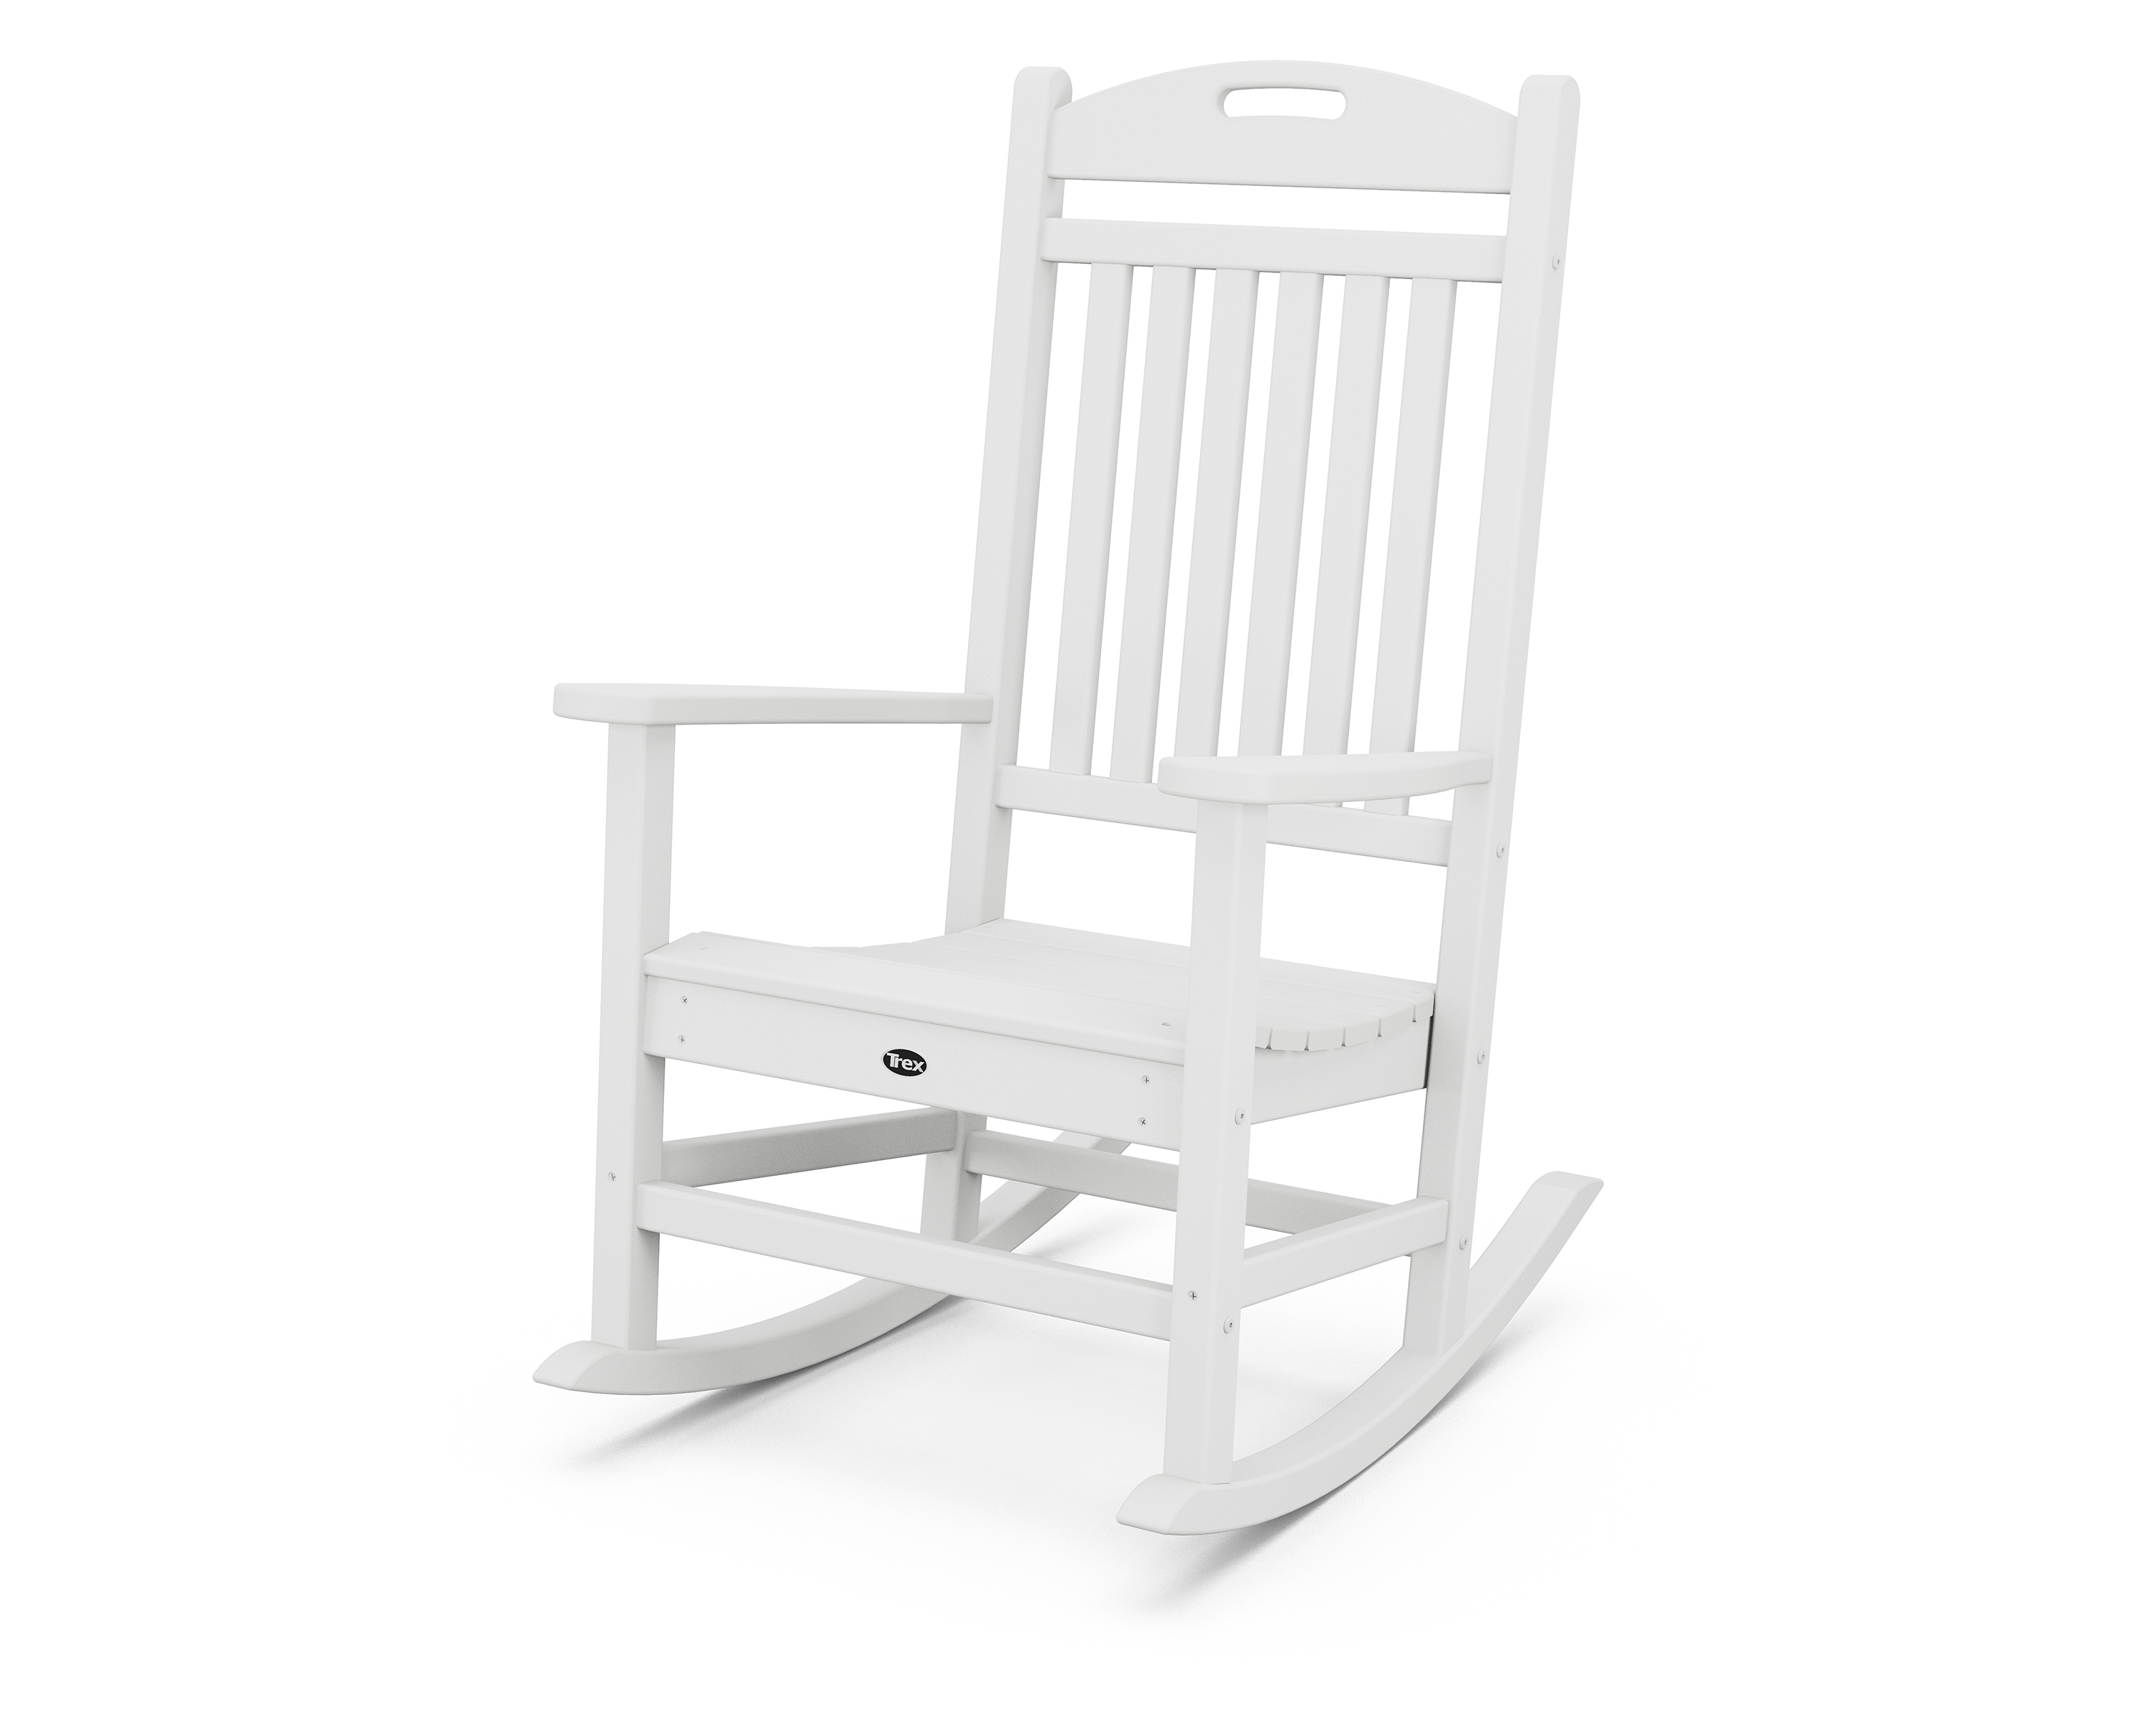 TrexÂ® Outdoor Furnitureâ„¢ Yacht Club Rocking Chair